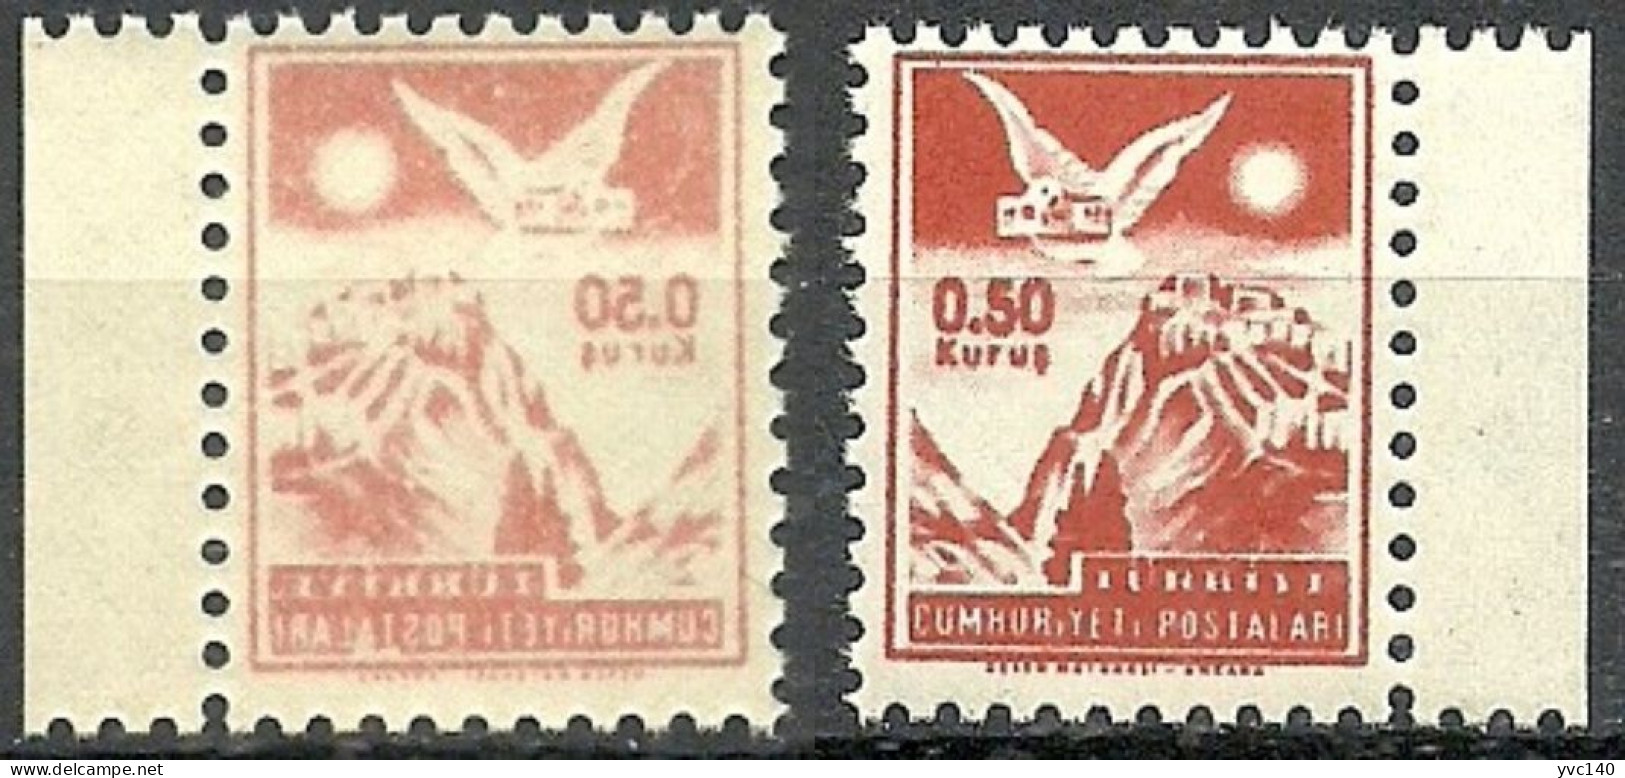 Turkey; 1954 "0.50 Kurus" Postage Stamp "Abklatsch Print" - Unused Stamps